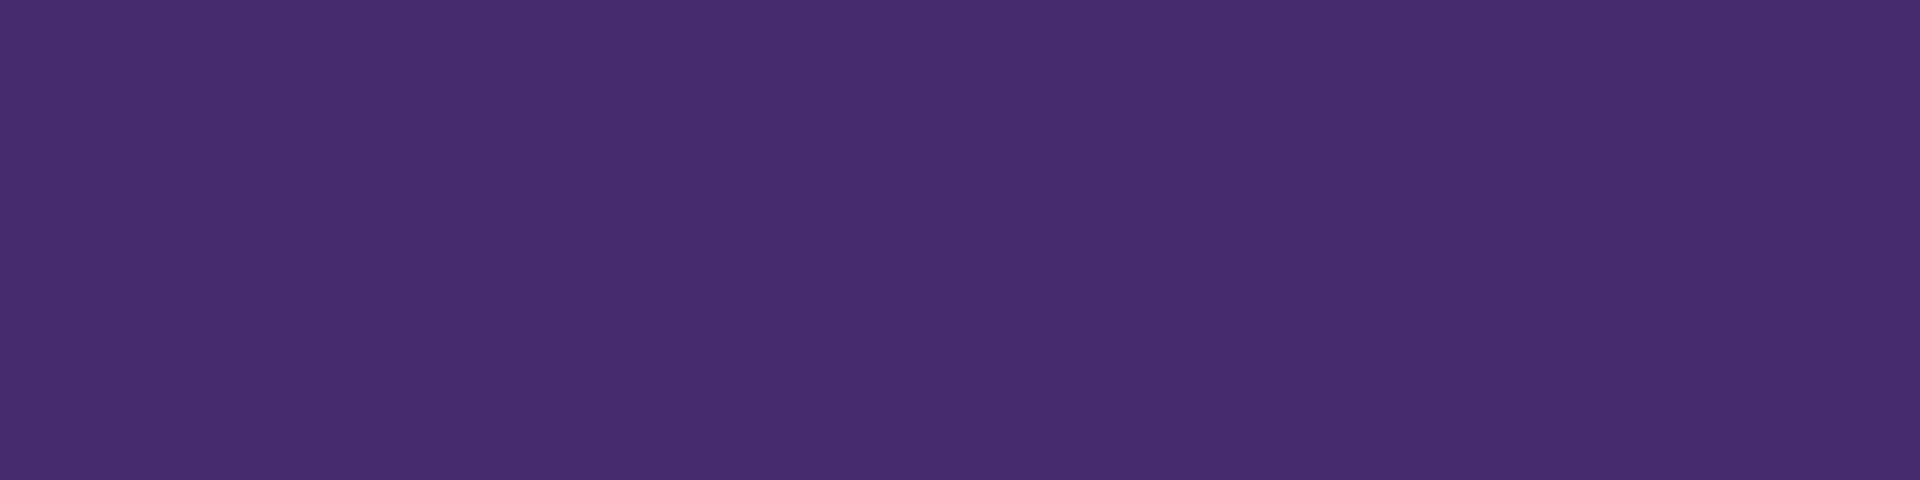 A plain purple banner